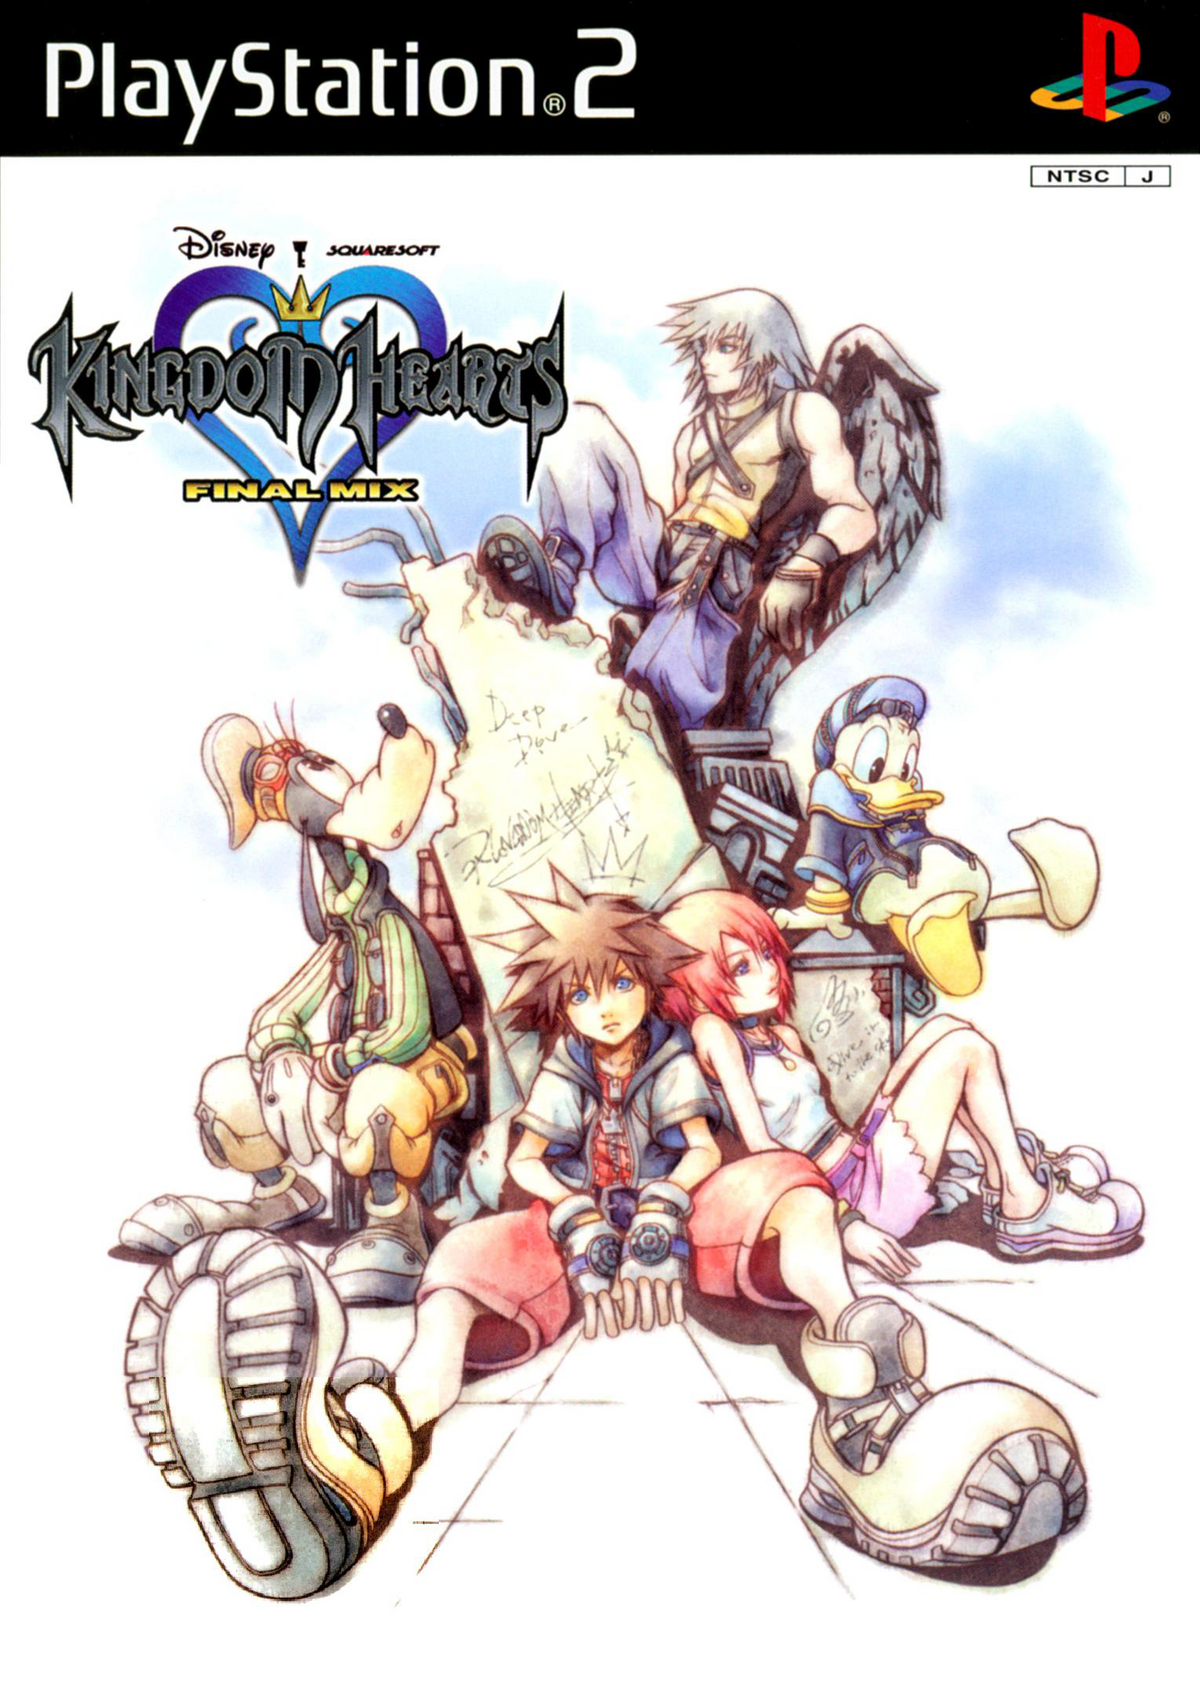 Kingdom Hearts II Final Mix+ for PlayStation 2